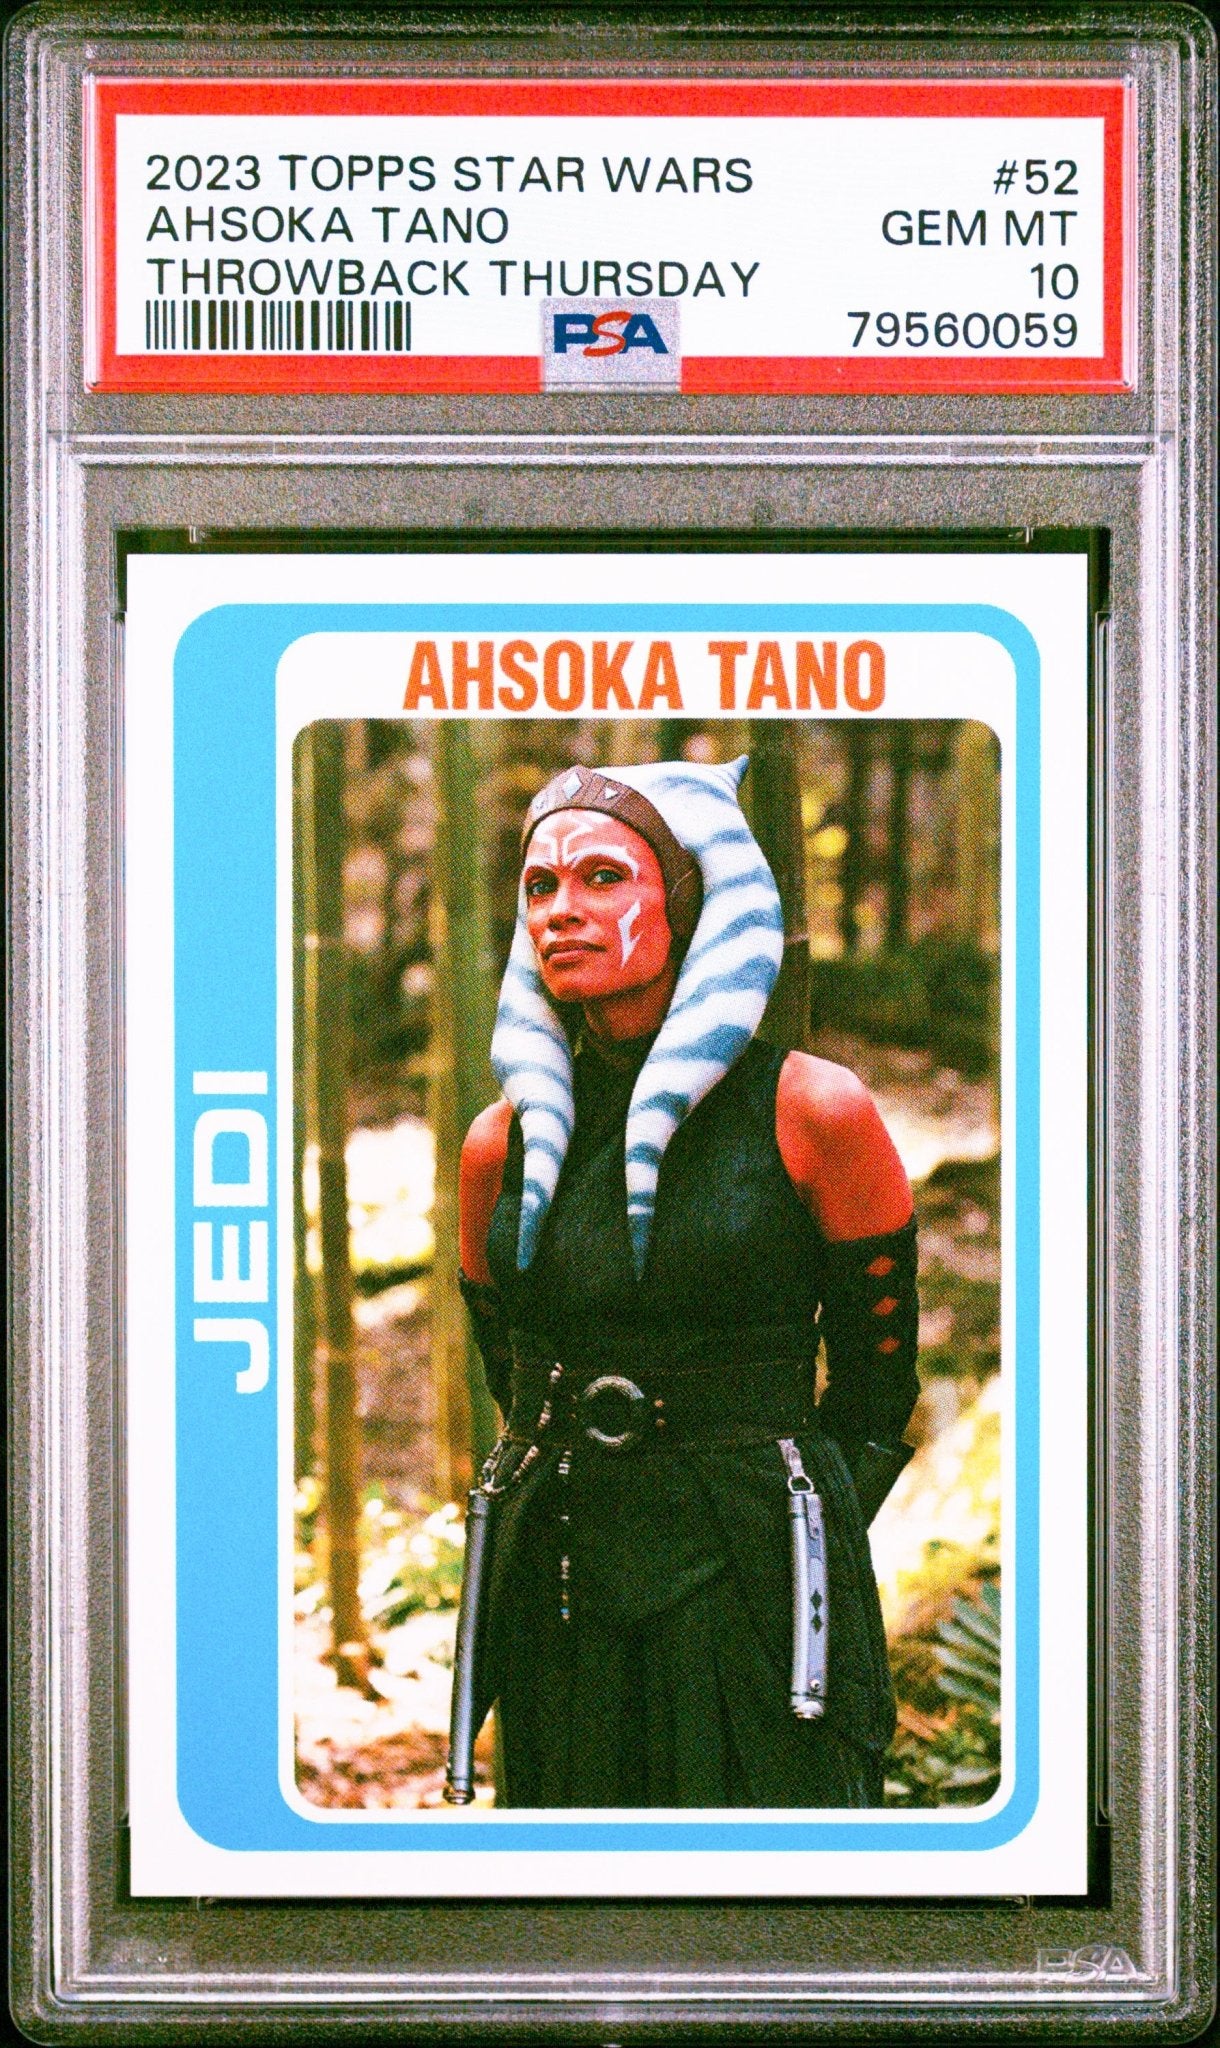 AHSOKA TANO PSA 10 2023 Topps Star Wars Throwback Thursday TBT #52 C1 Star Wars Base Graded Cards - Hobby Gems